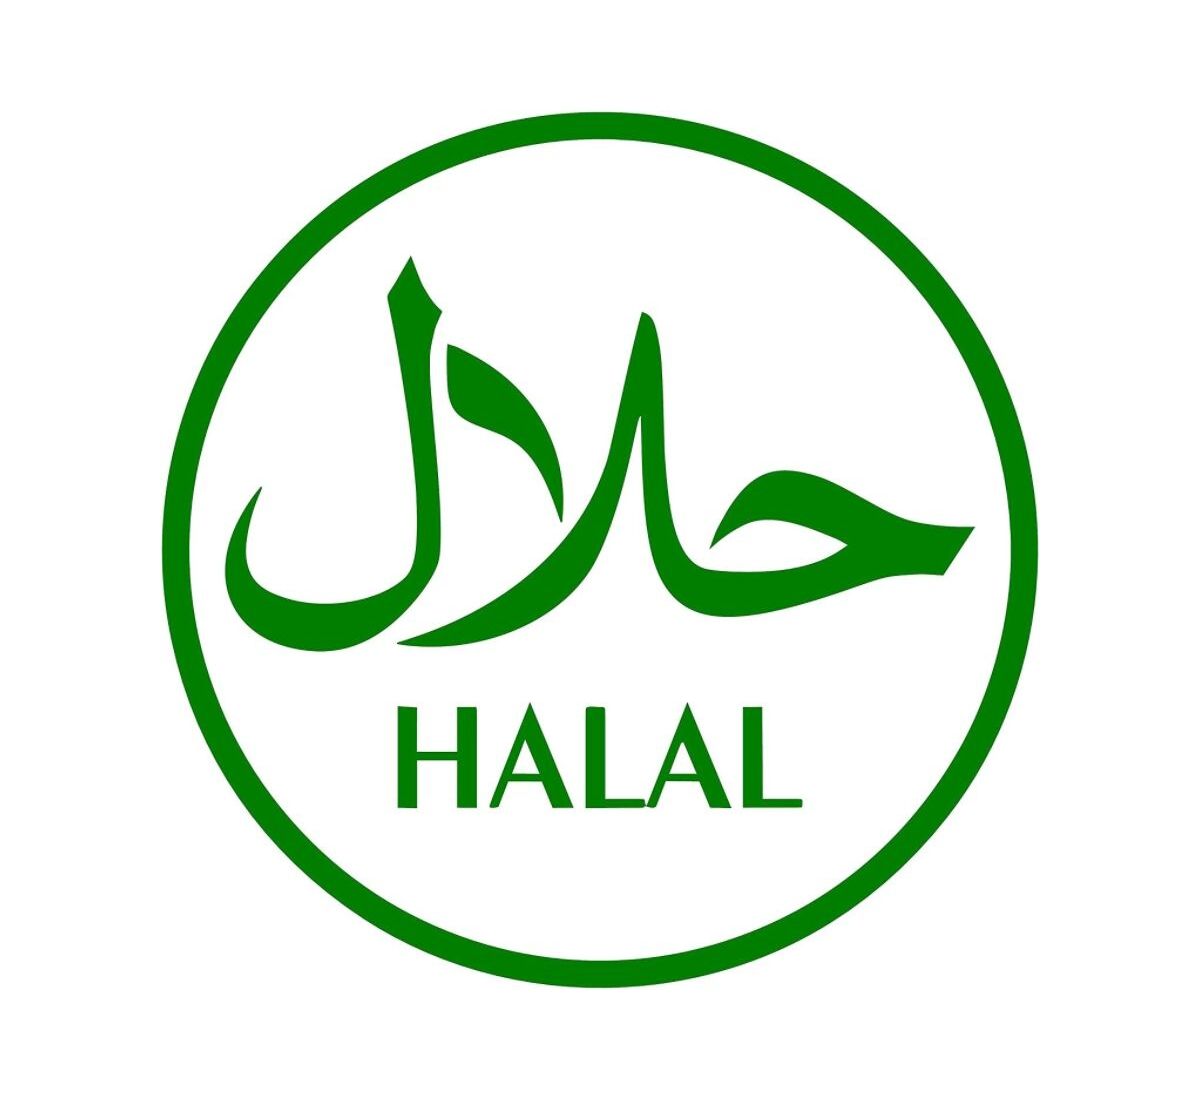 Halal sign